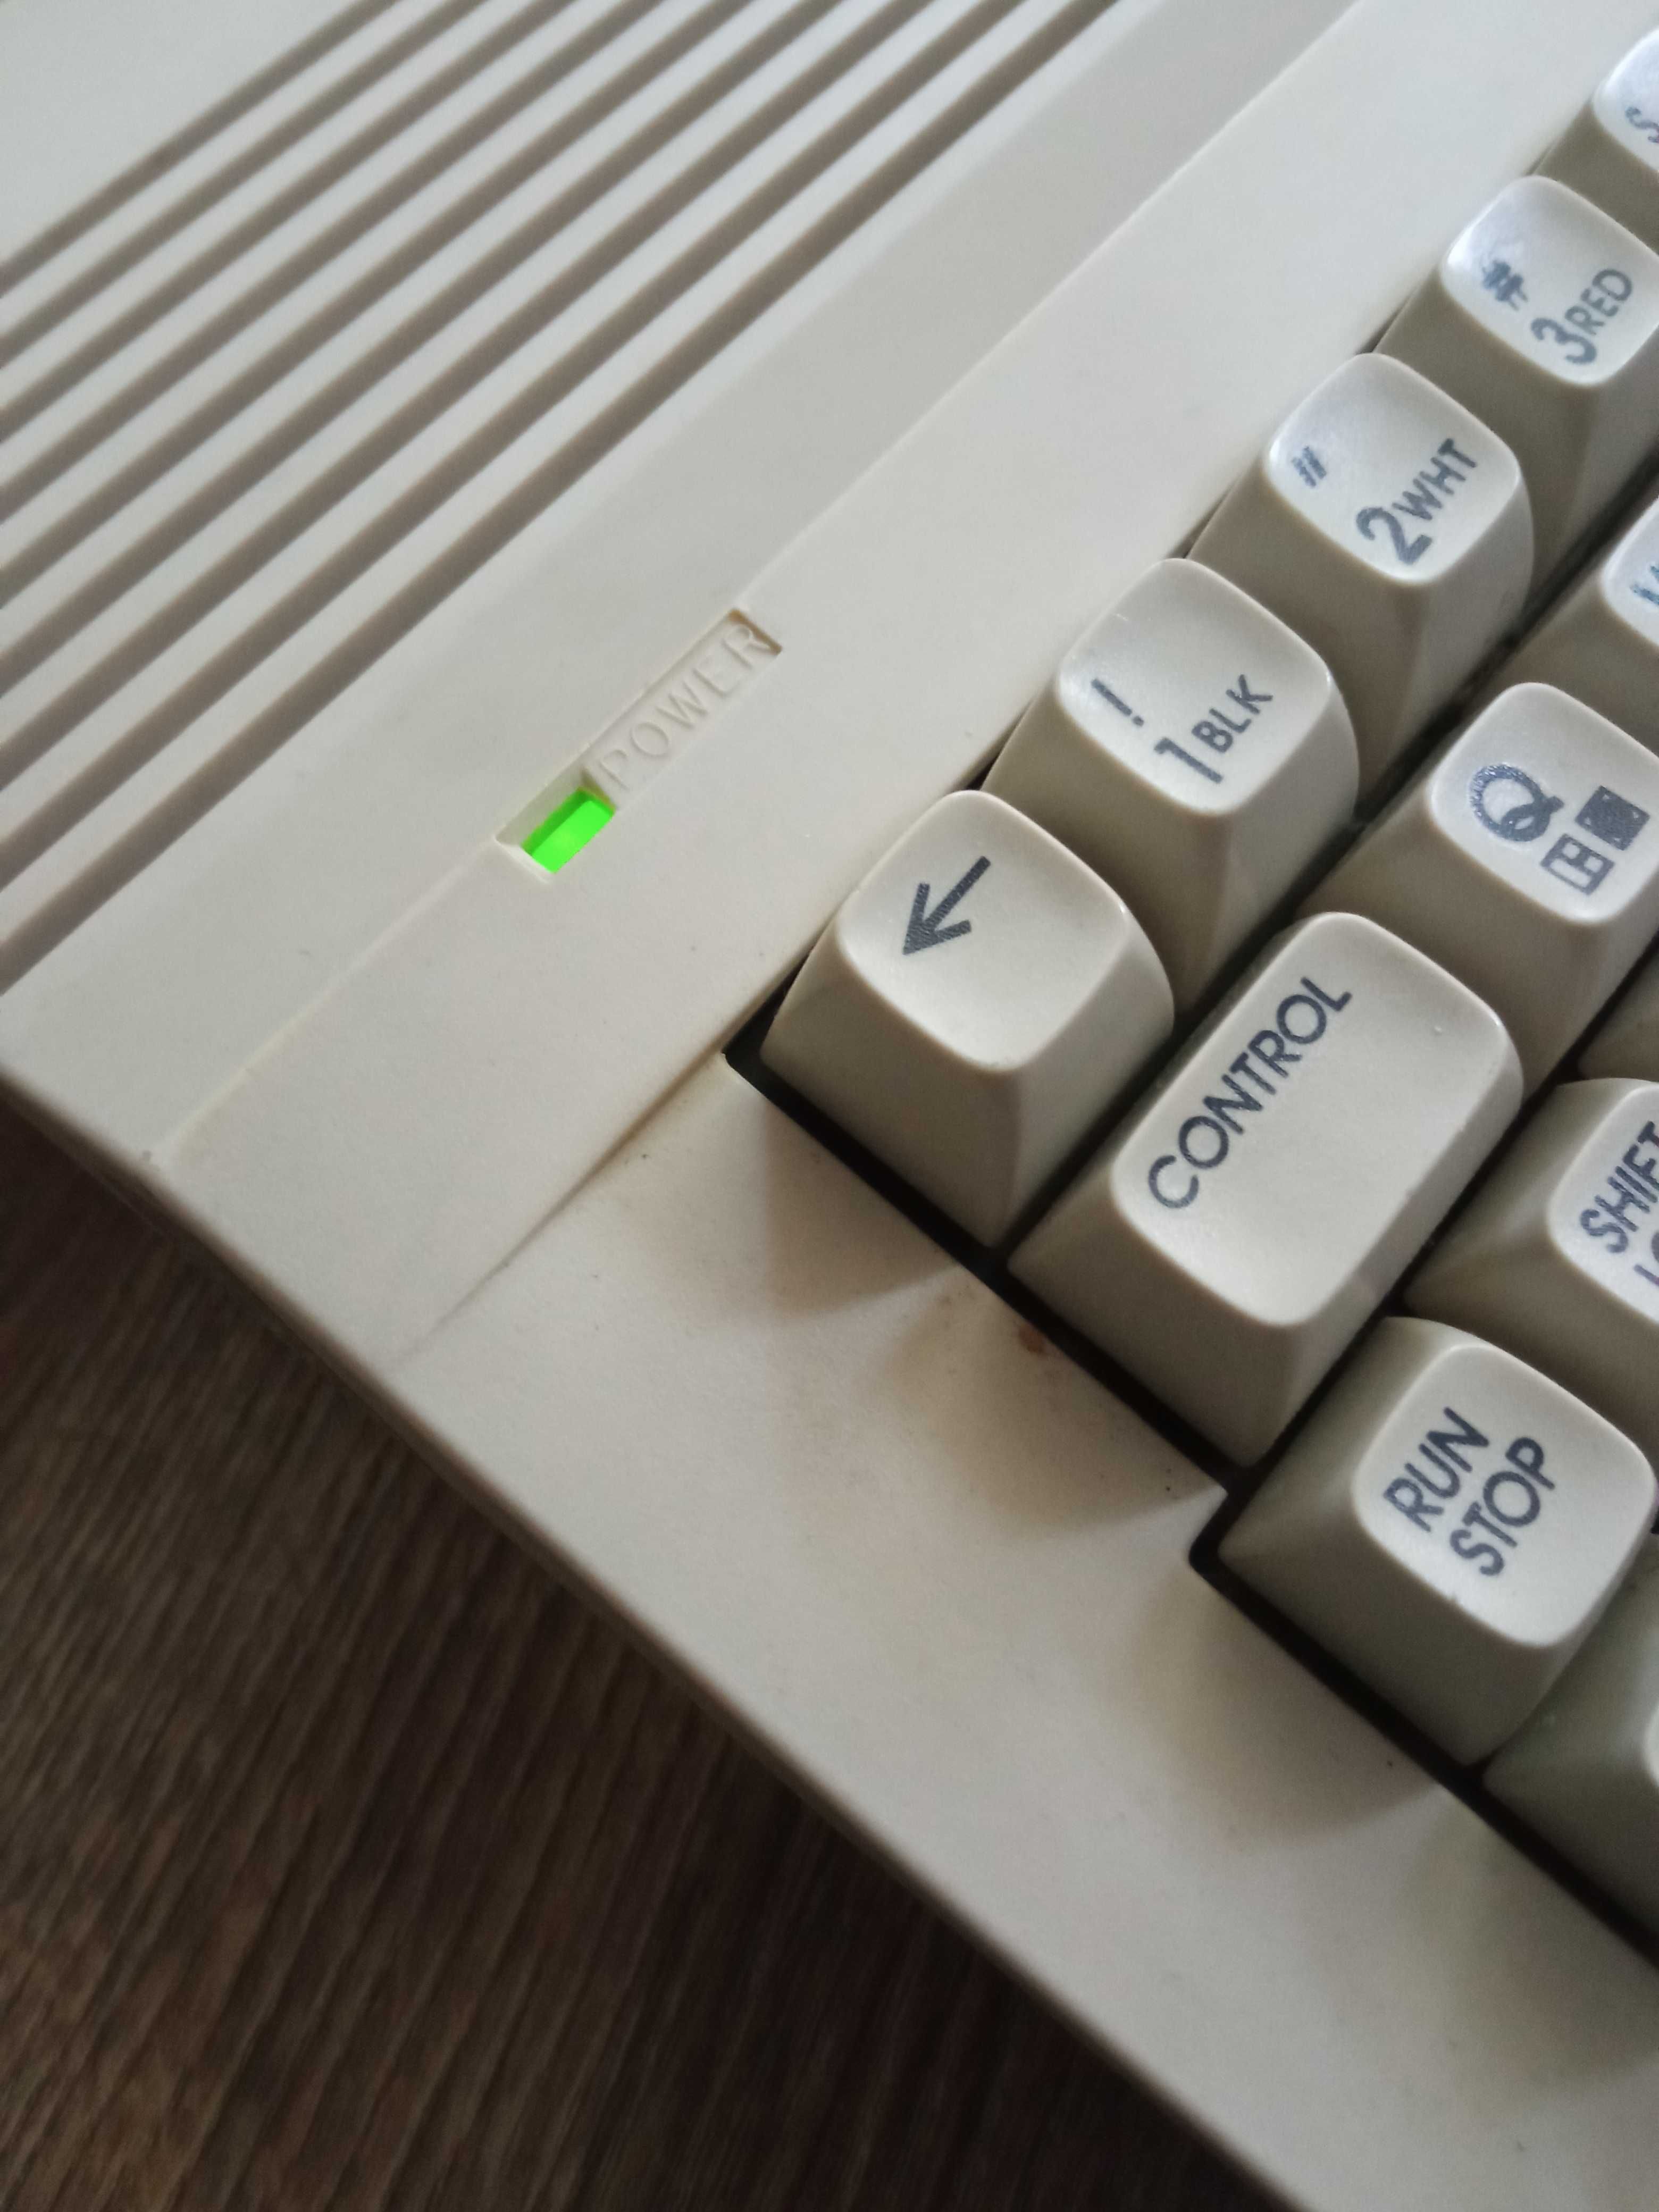 Sprzęt komputerowy Atari 800XE Commodore 64 II